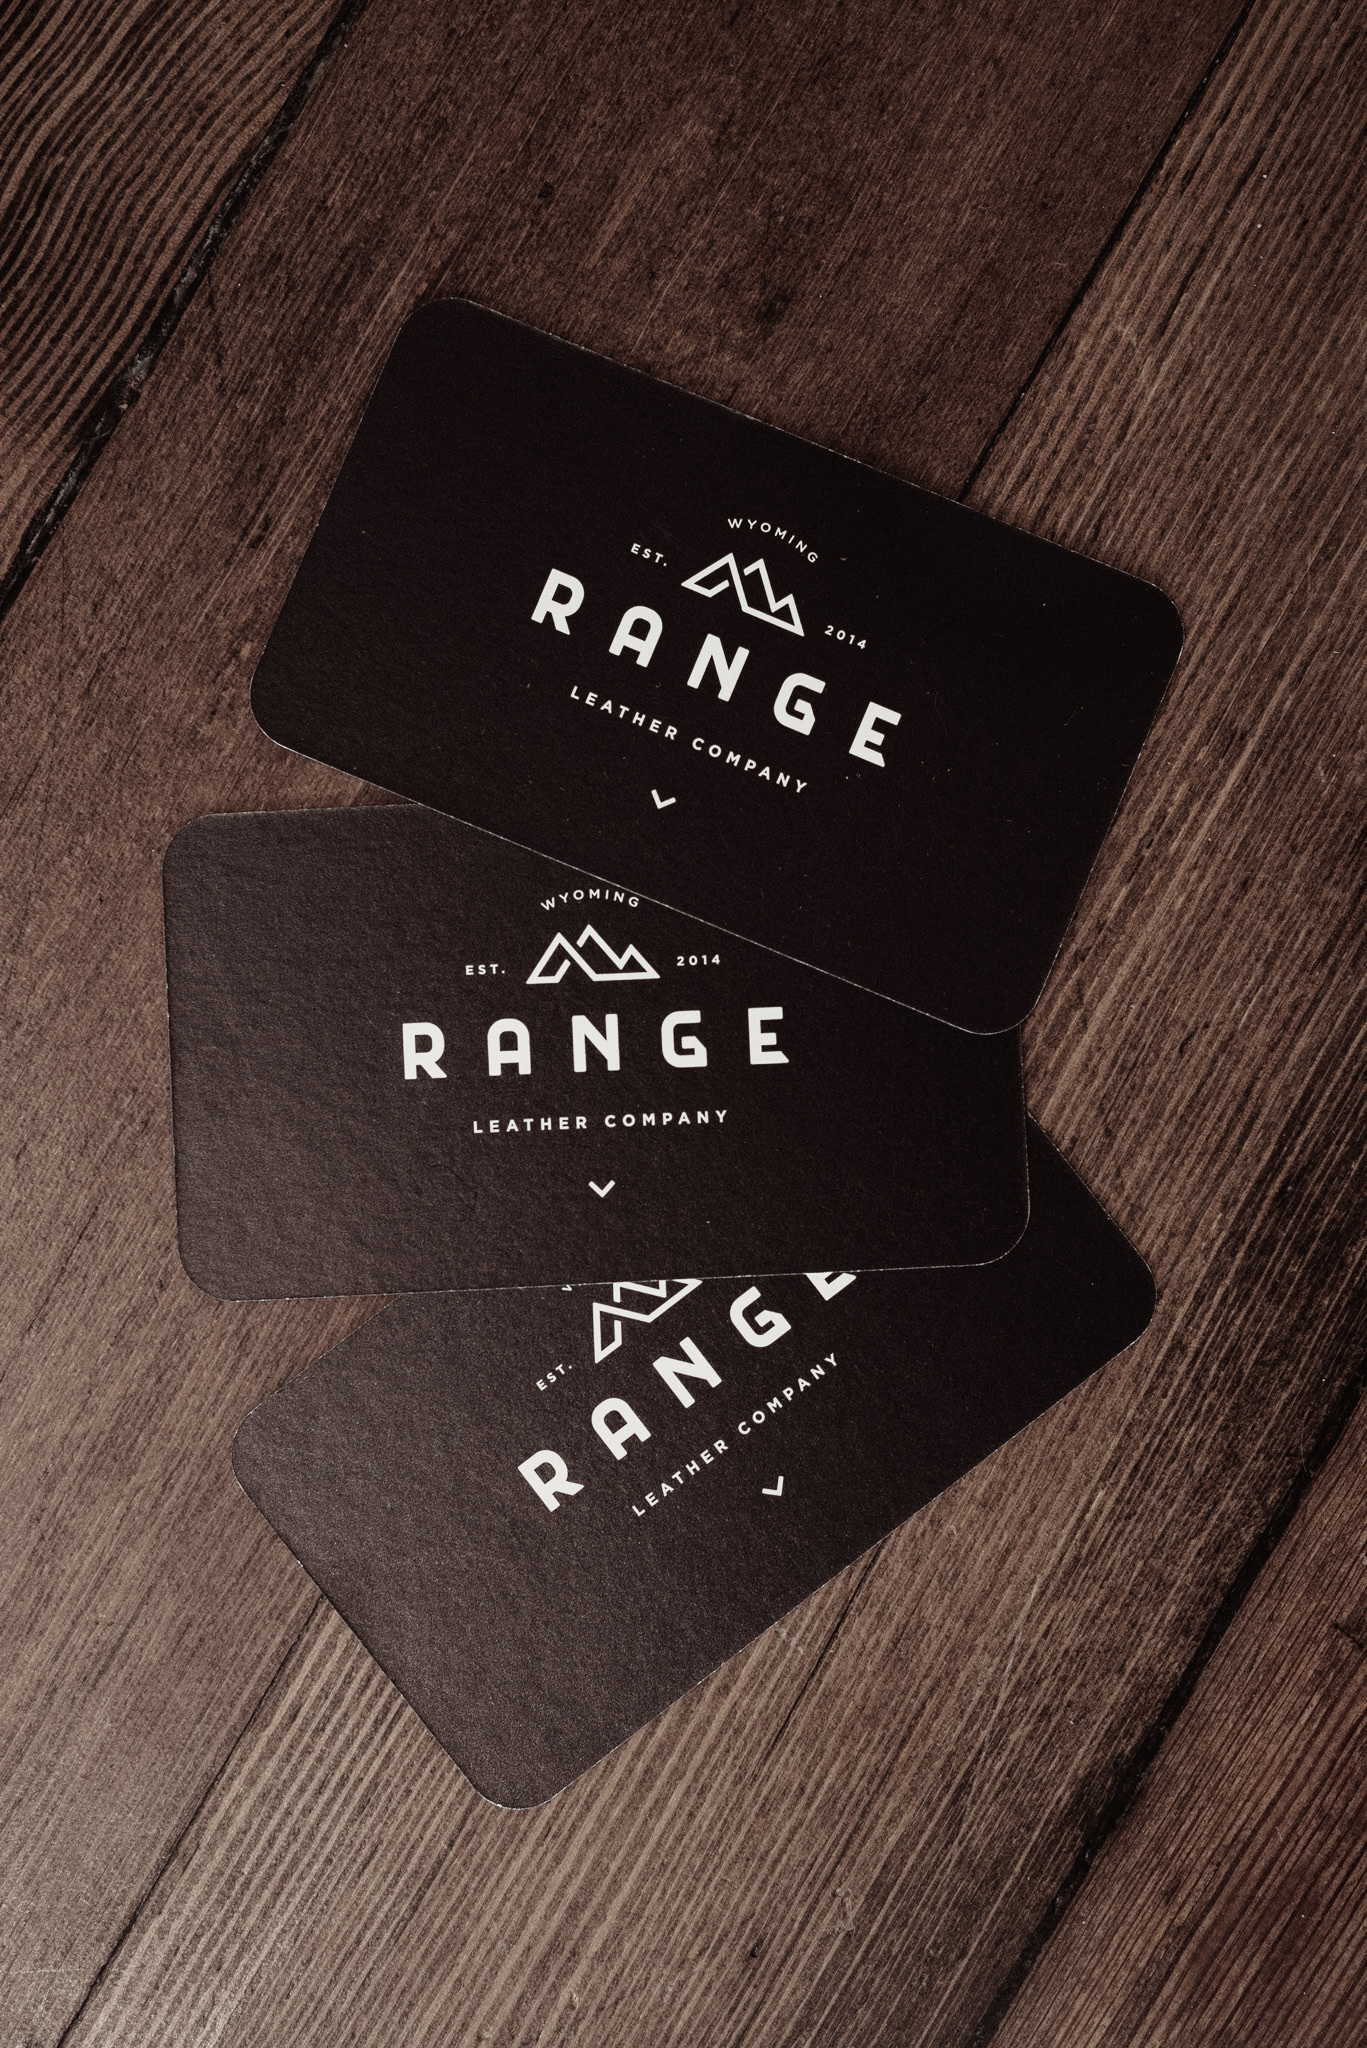 Range_Leather-13